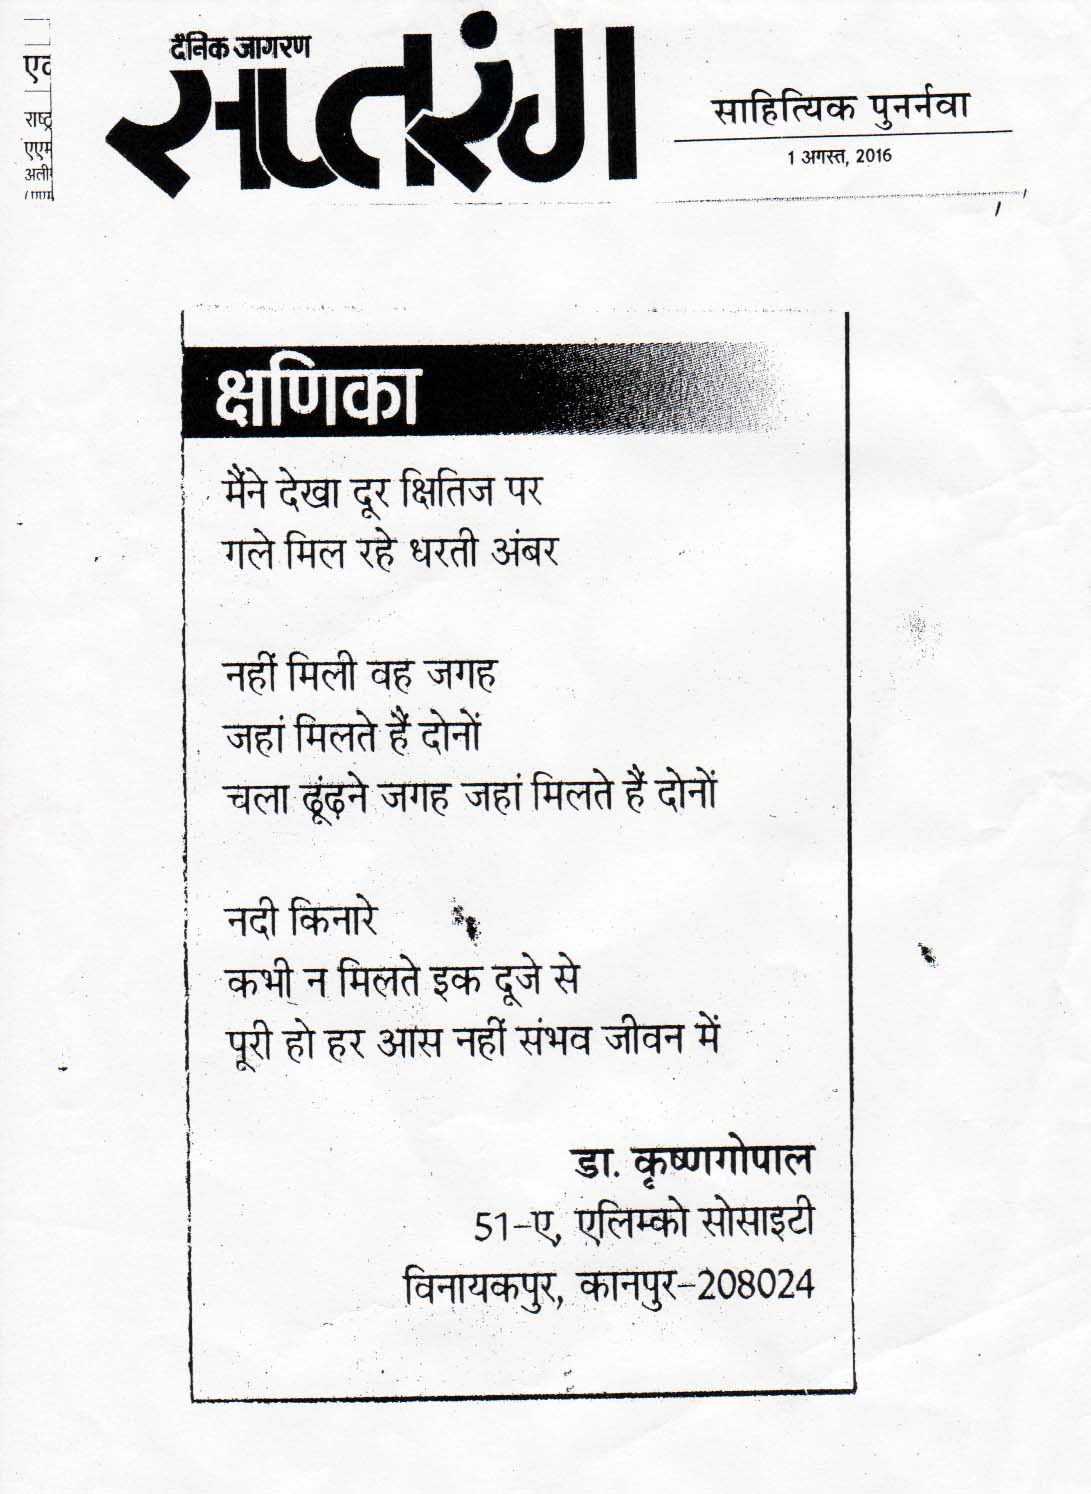 Publication Of A Hindi Poem in "Dainik Jagran"